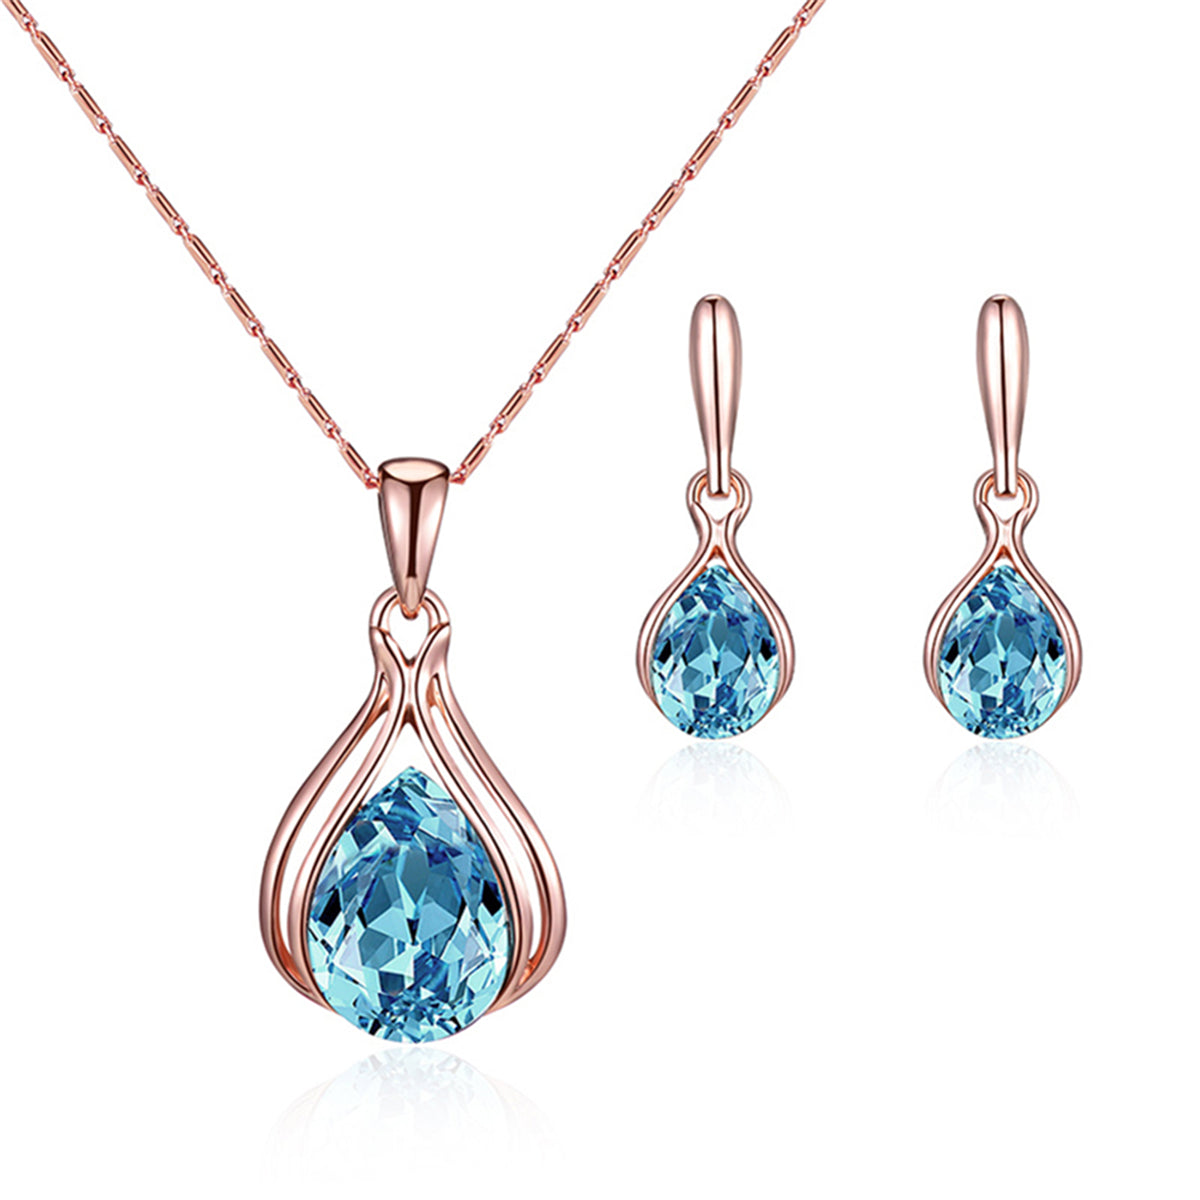 Blue & White Cubic Zirconia Pendant Necklace & Drop Earrings